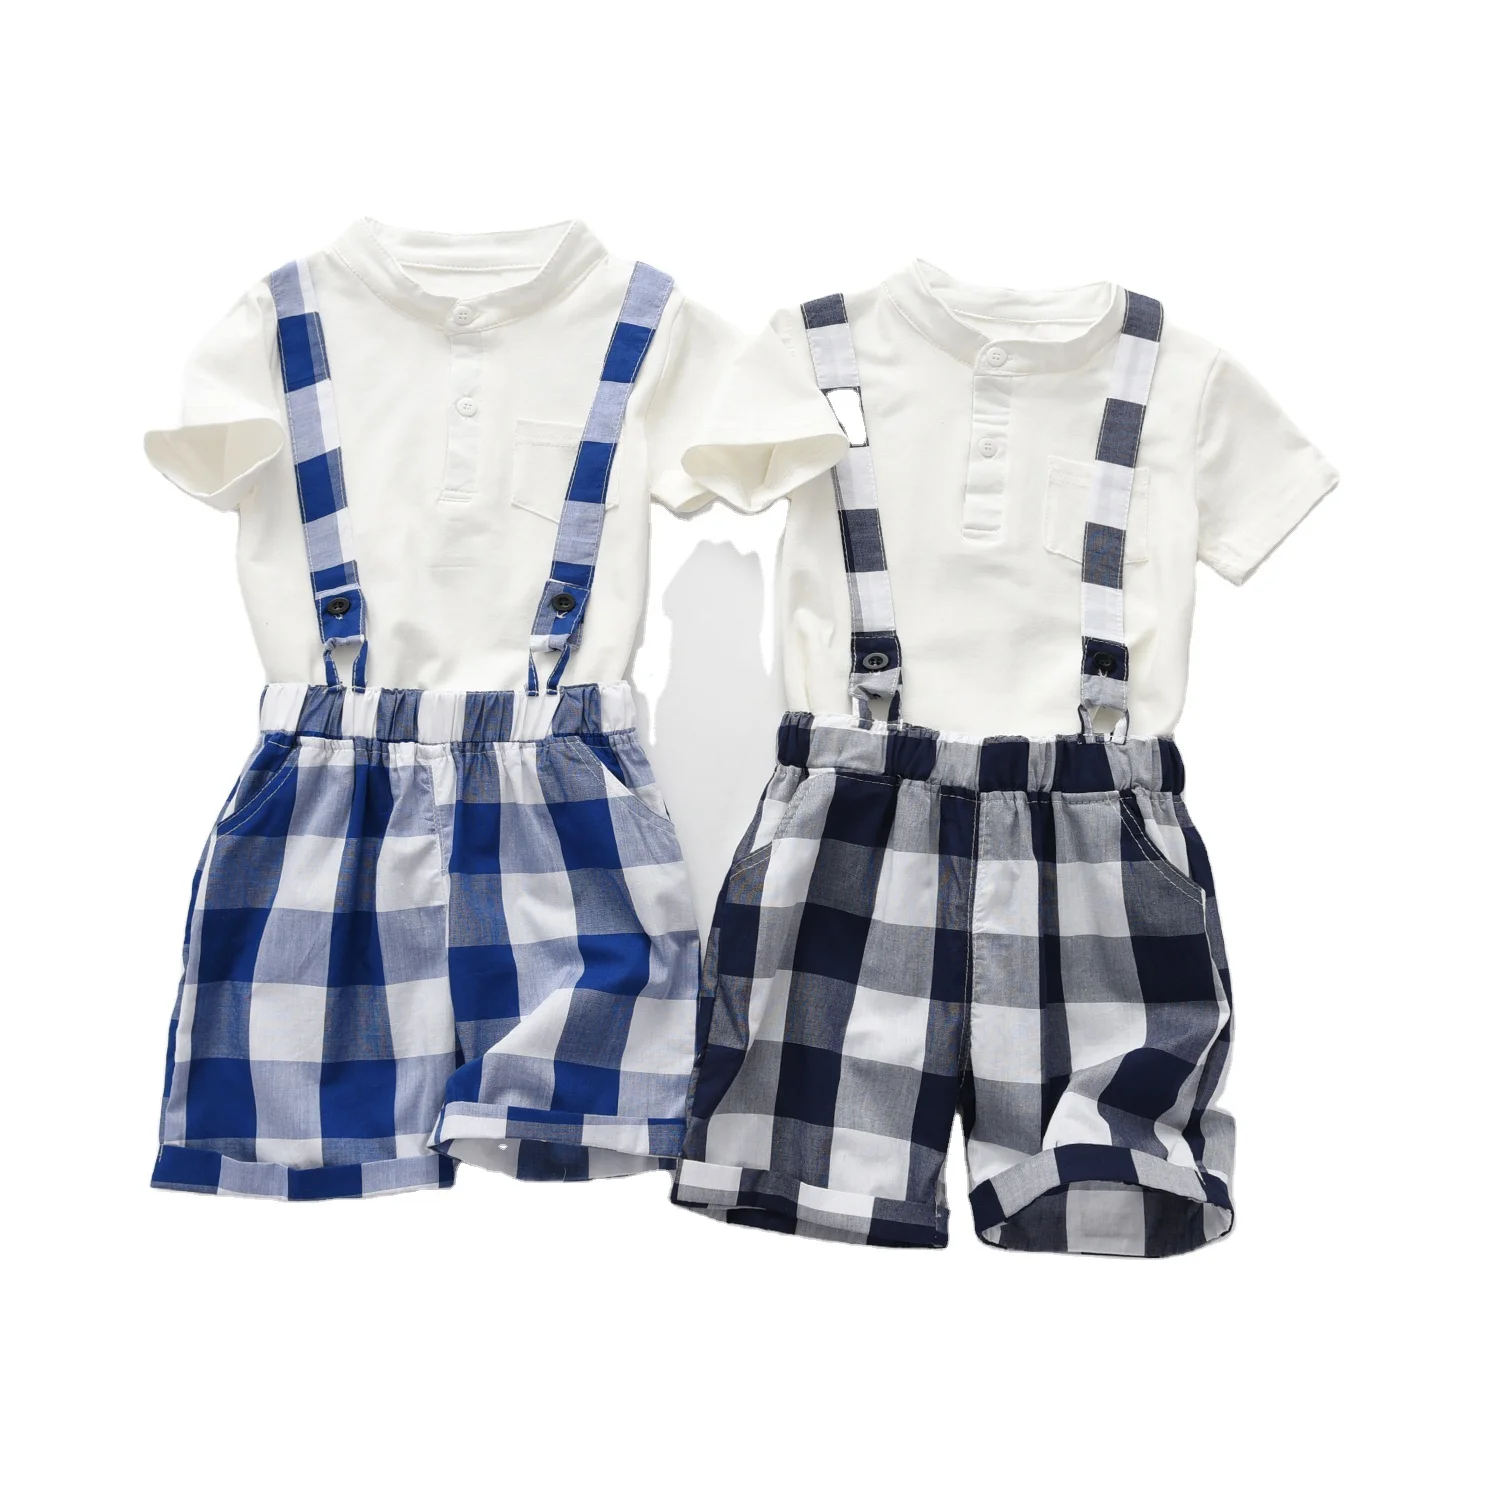 

new arrival summer lattice short sleeve overalls baby boys clothes set, Blue/gray